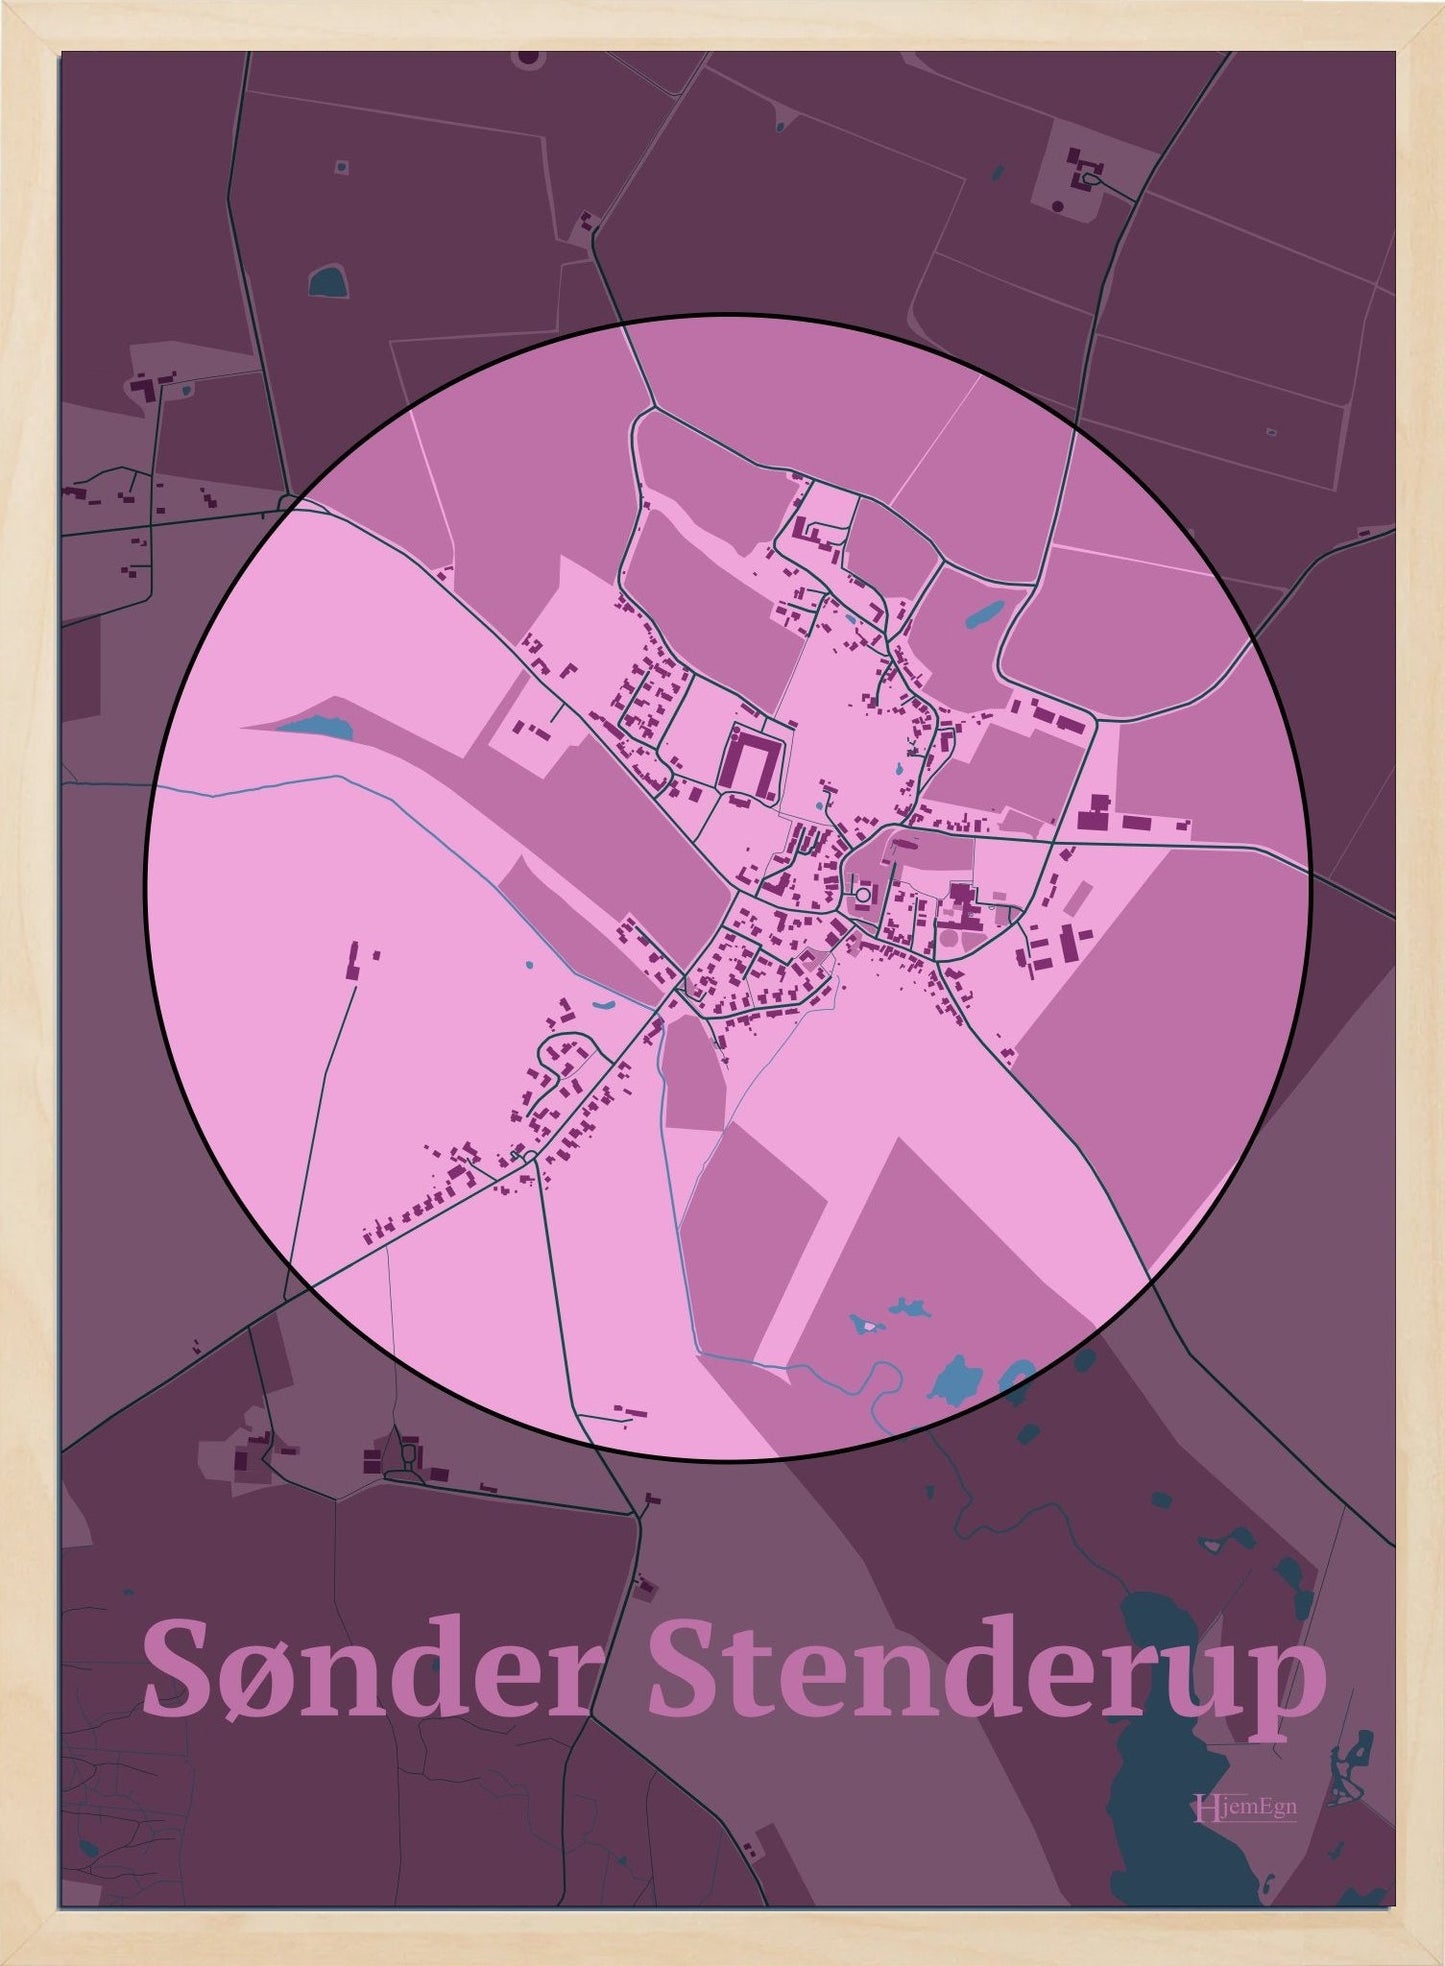 Sønder Stenderup plakat i farve pastel rød og HjemEgn.dk design centrum. Design bykort for Sønder Stenderup